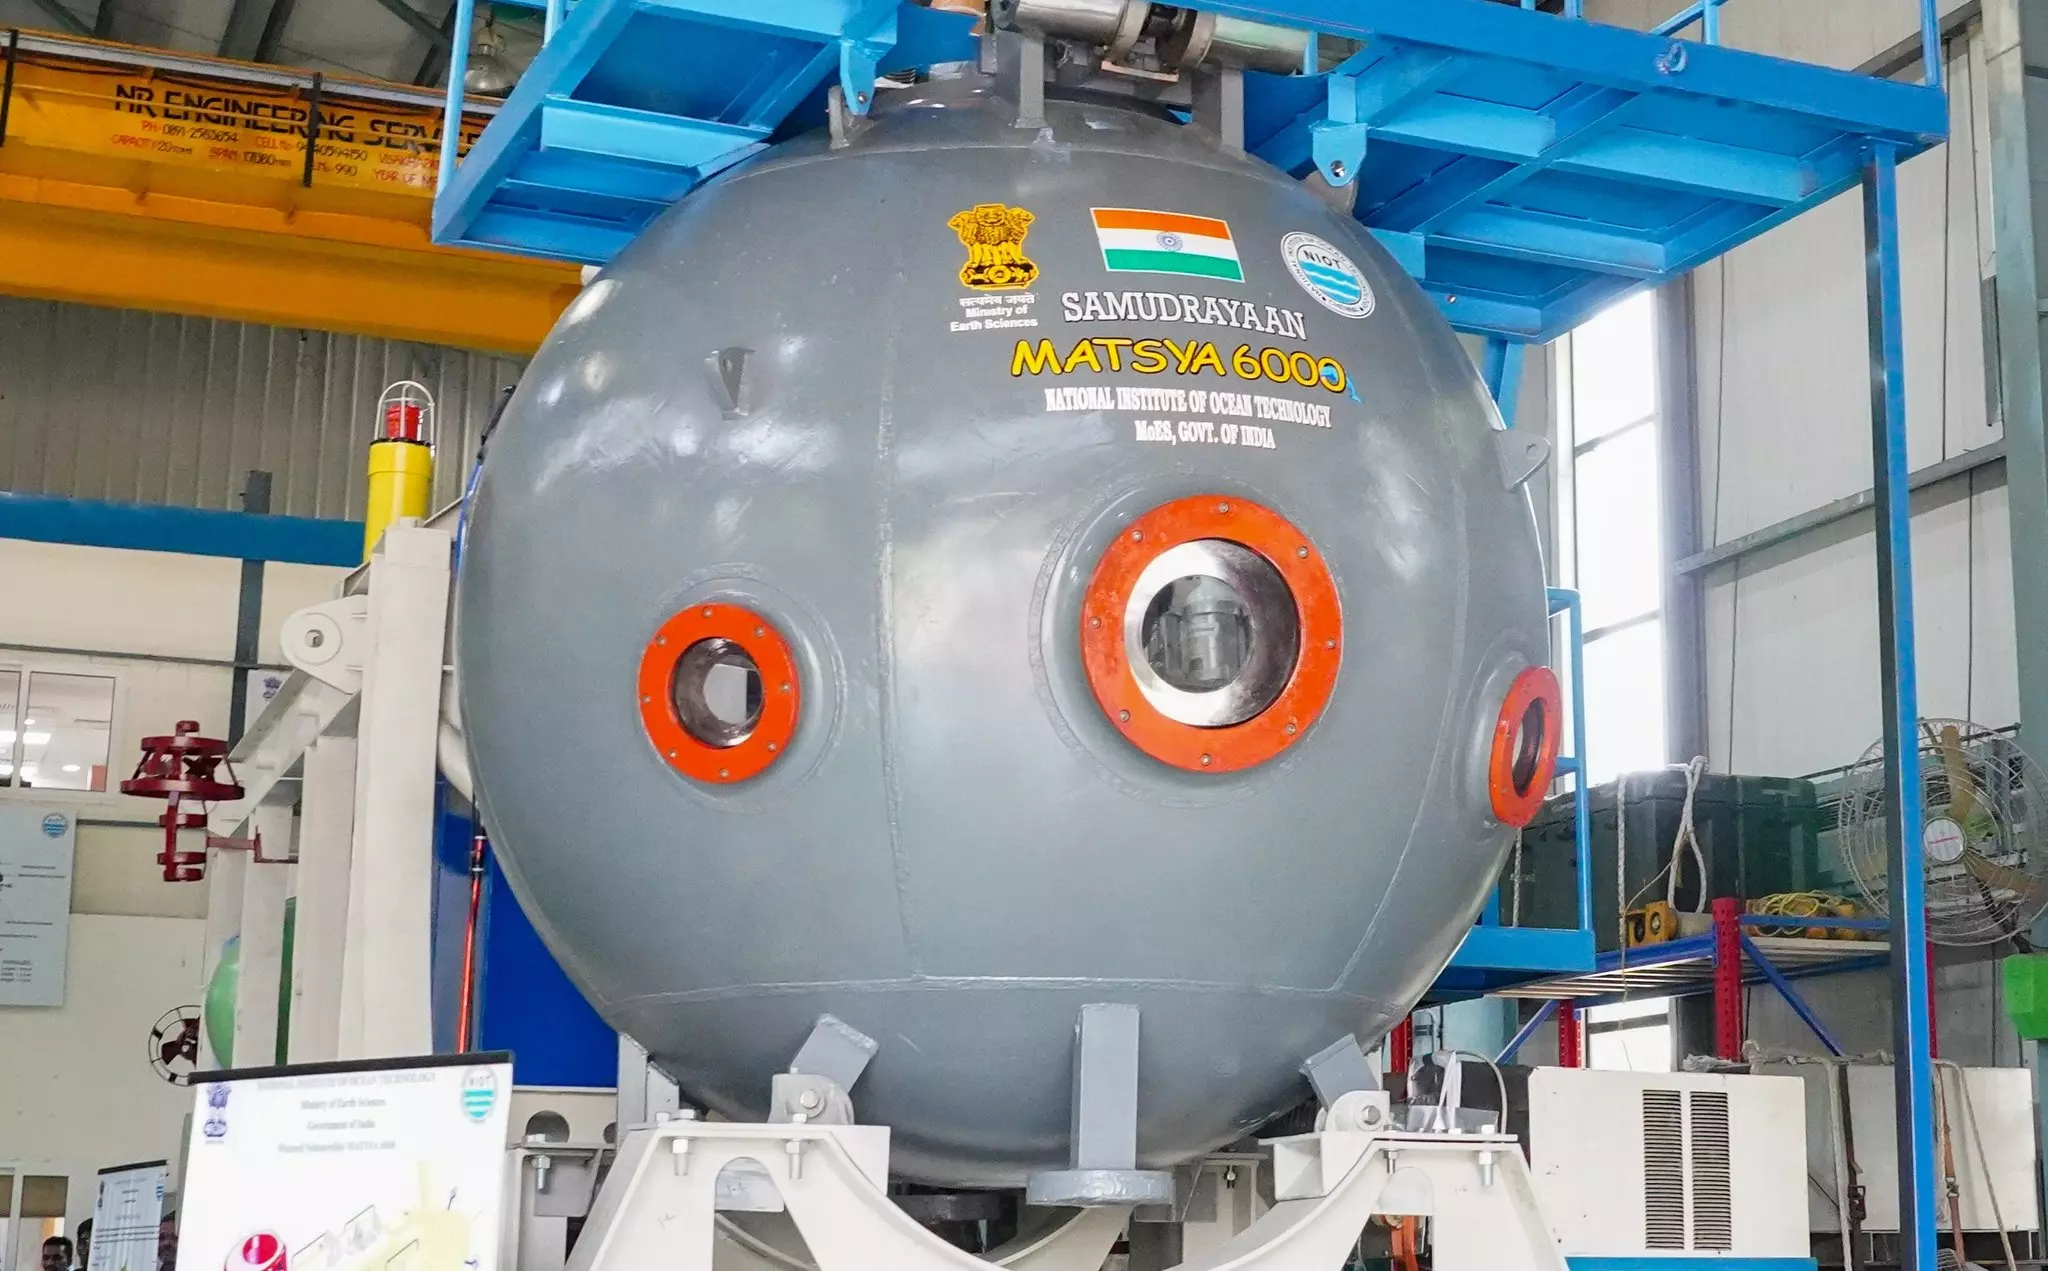 Explainer: A look at ‘Samudrayaan’ - Indias deep-sea exploration vehicle